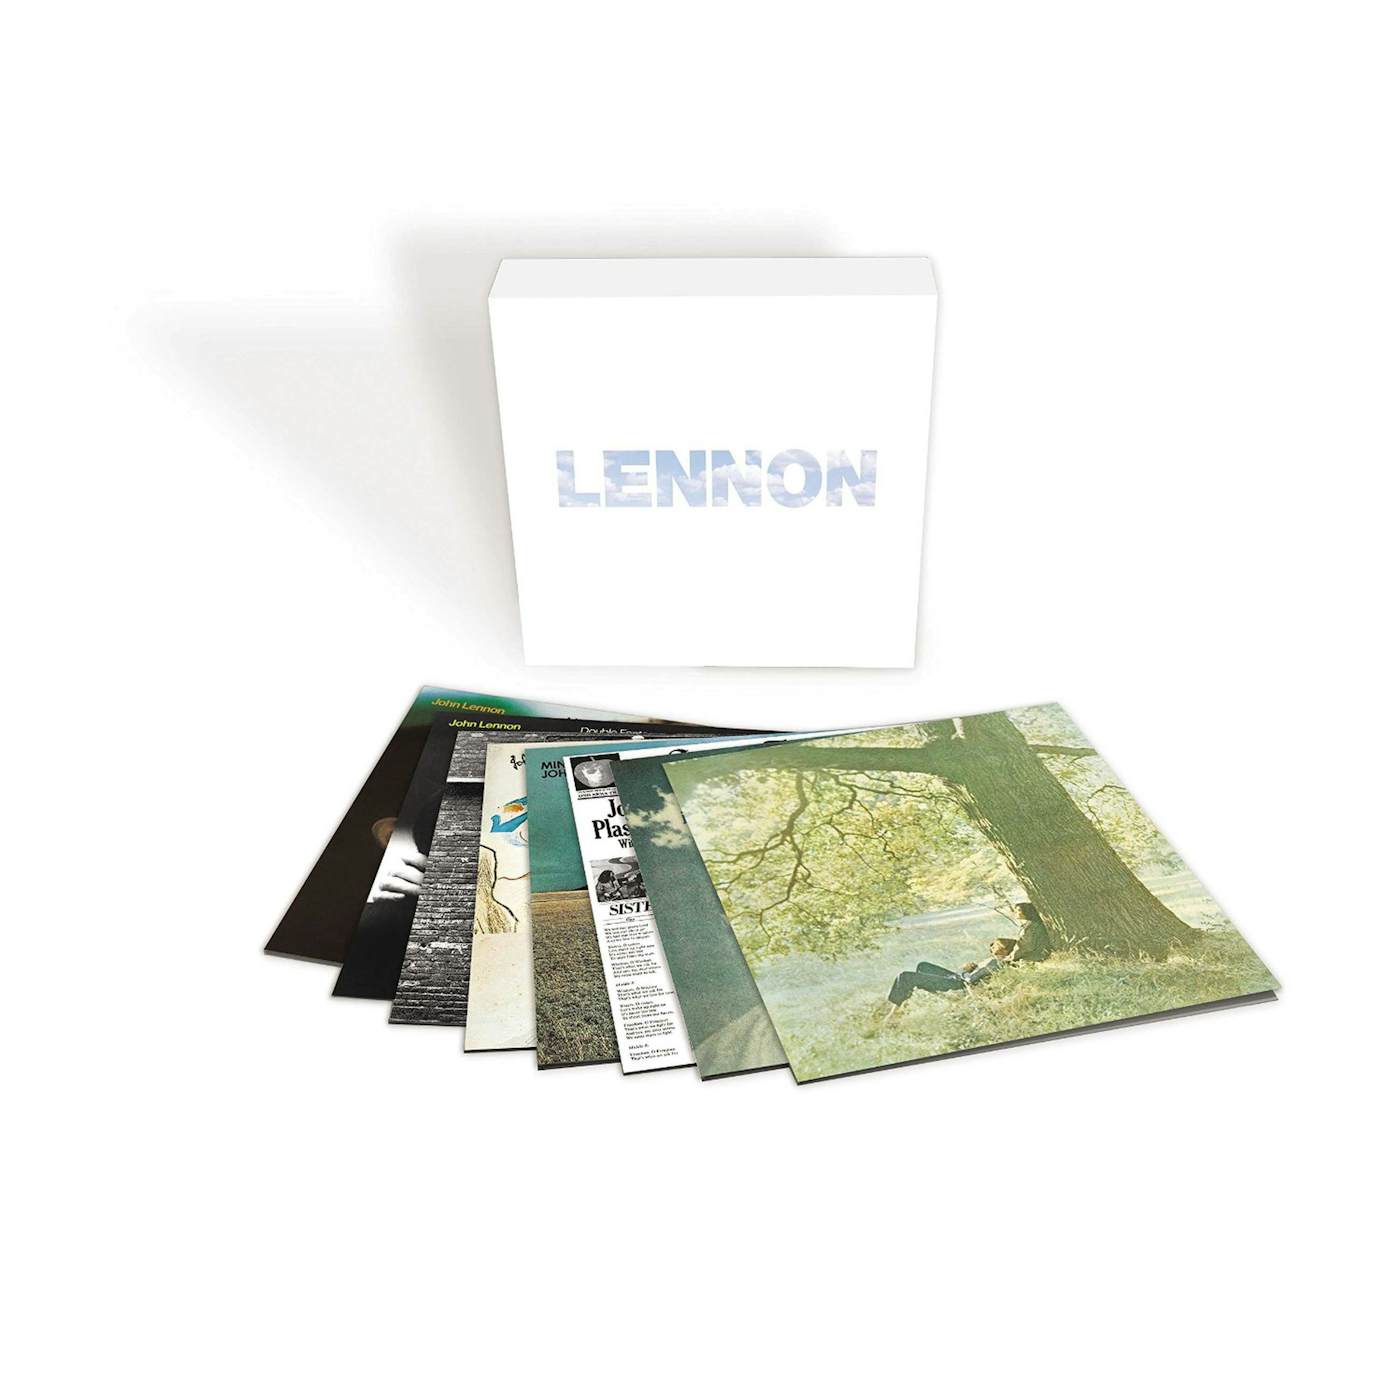 John Lennon Complete Solo Works - Limited Edition Box Set (Vinyl)